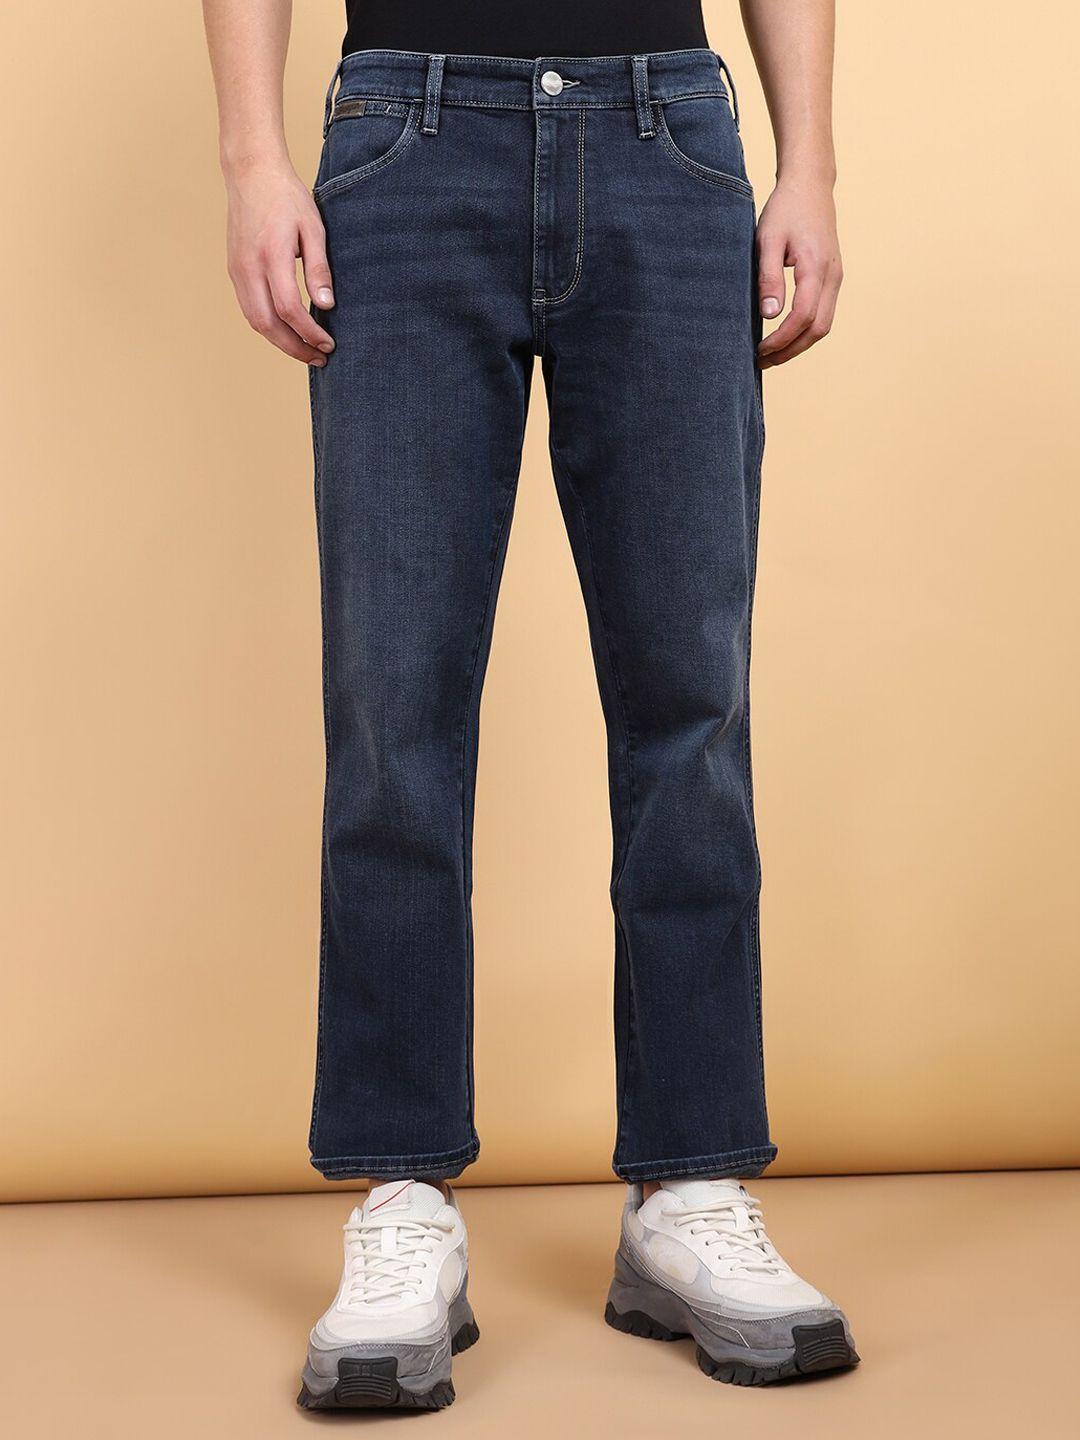 wrangler-men-millard-light-fade-mid-rise-stretchable-jeans